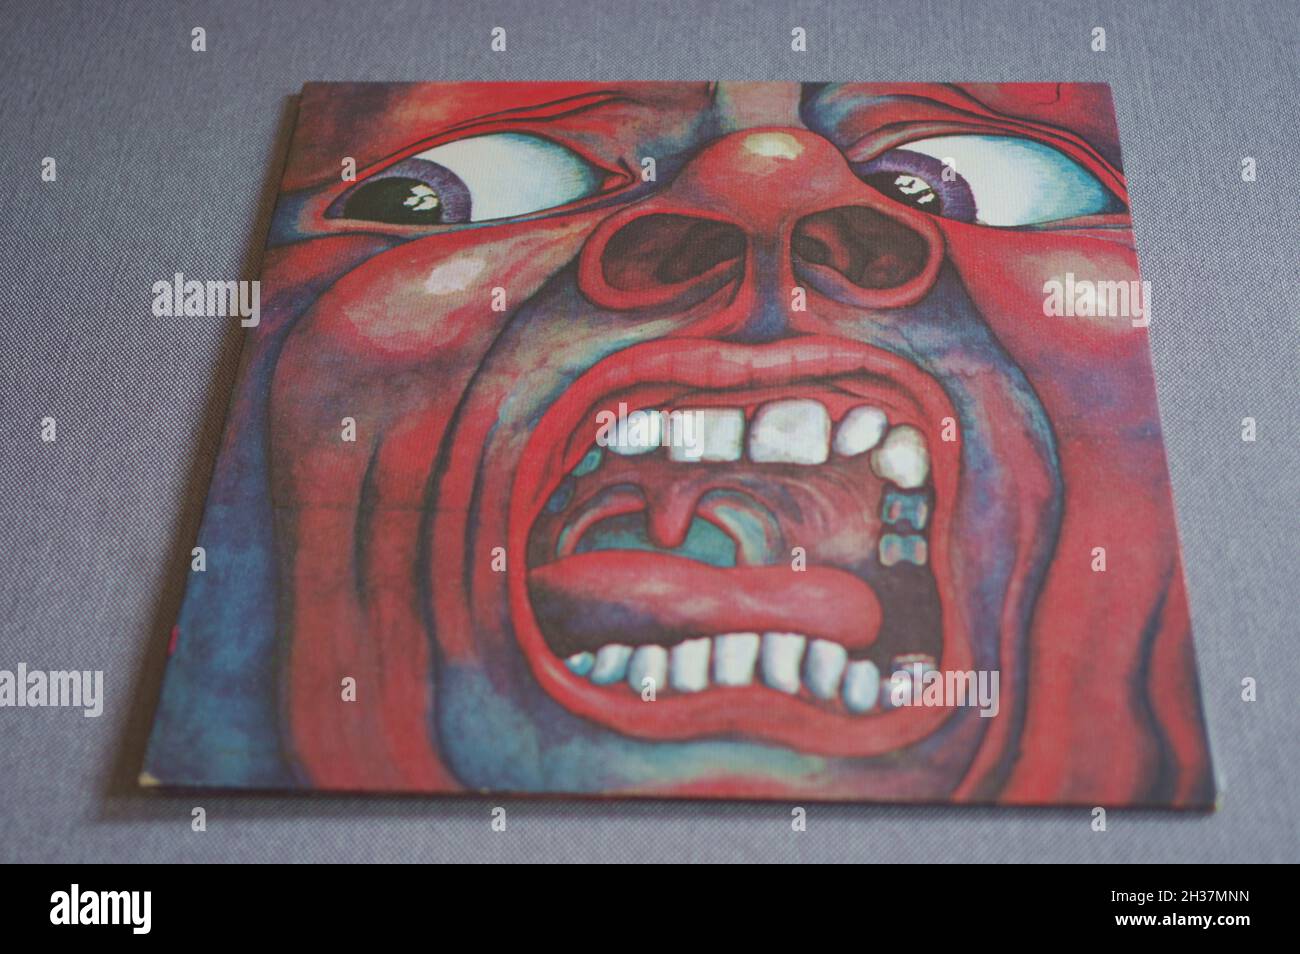 King Crimson 1969 debut album In the Court of the Crimson King vinyl LP paper sleeve cover 21st Century Schizoid Man face Stock Photo